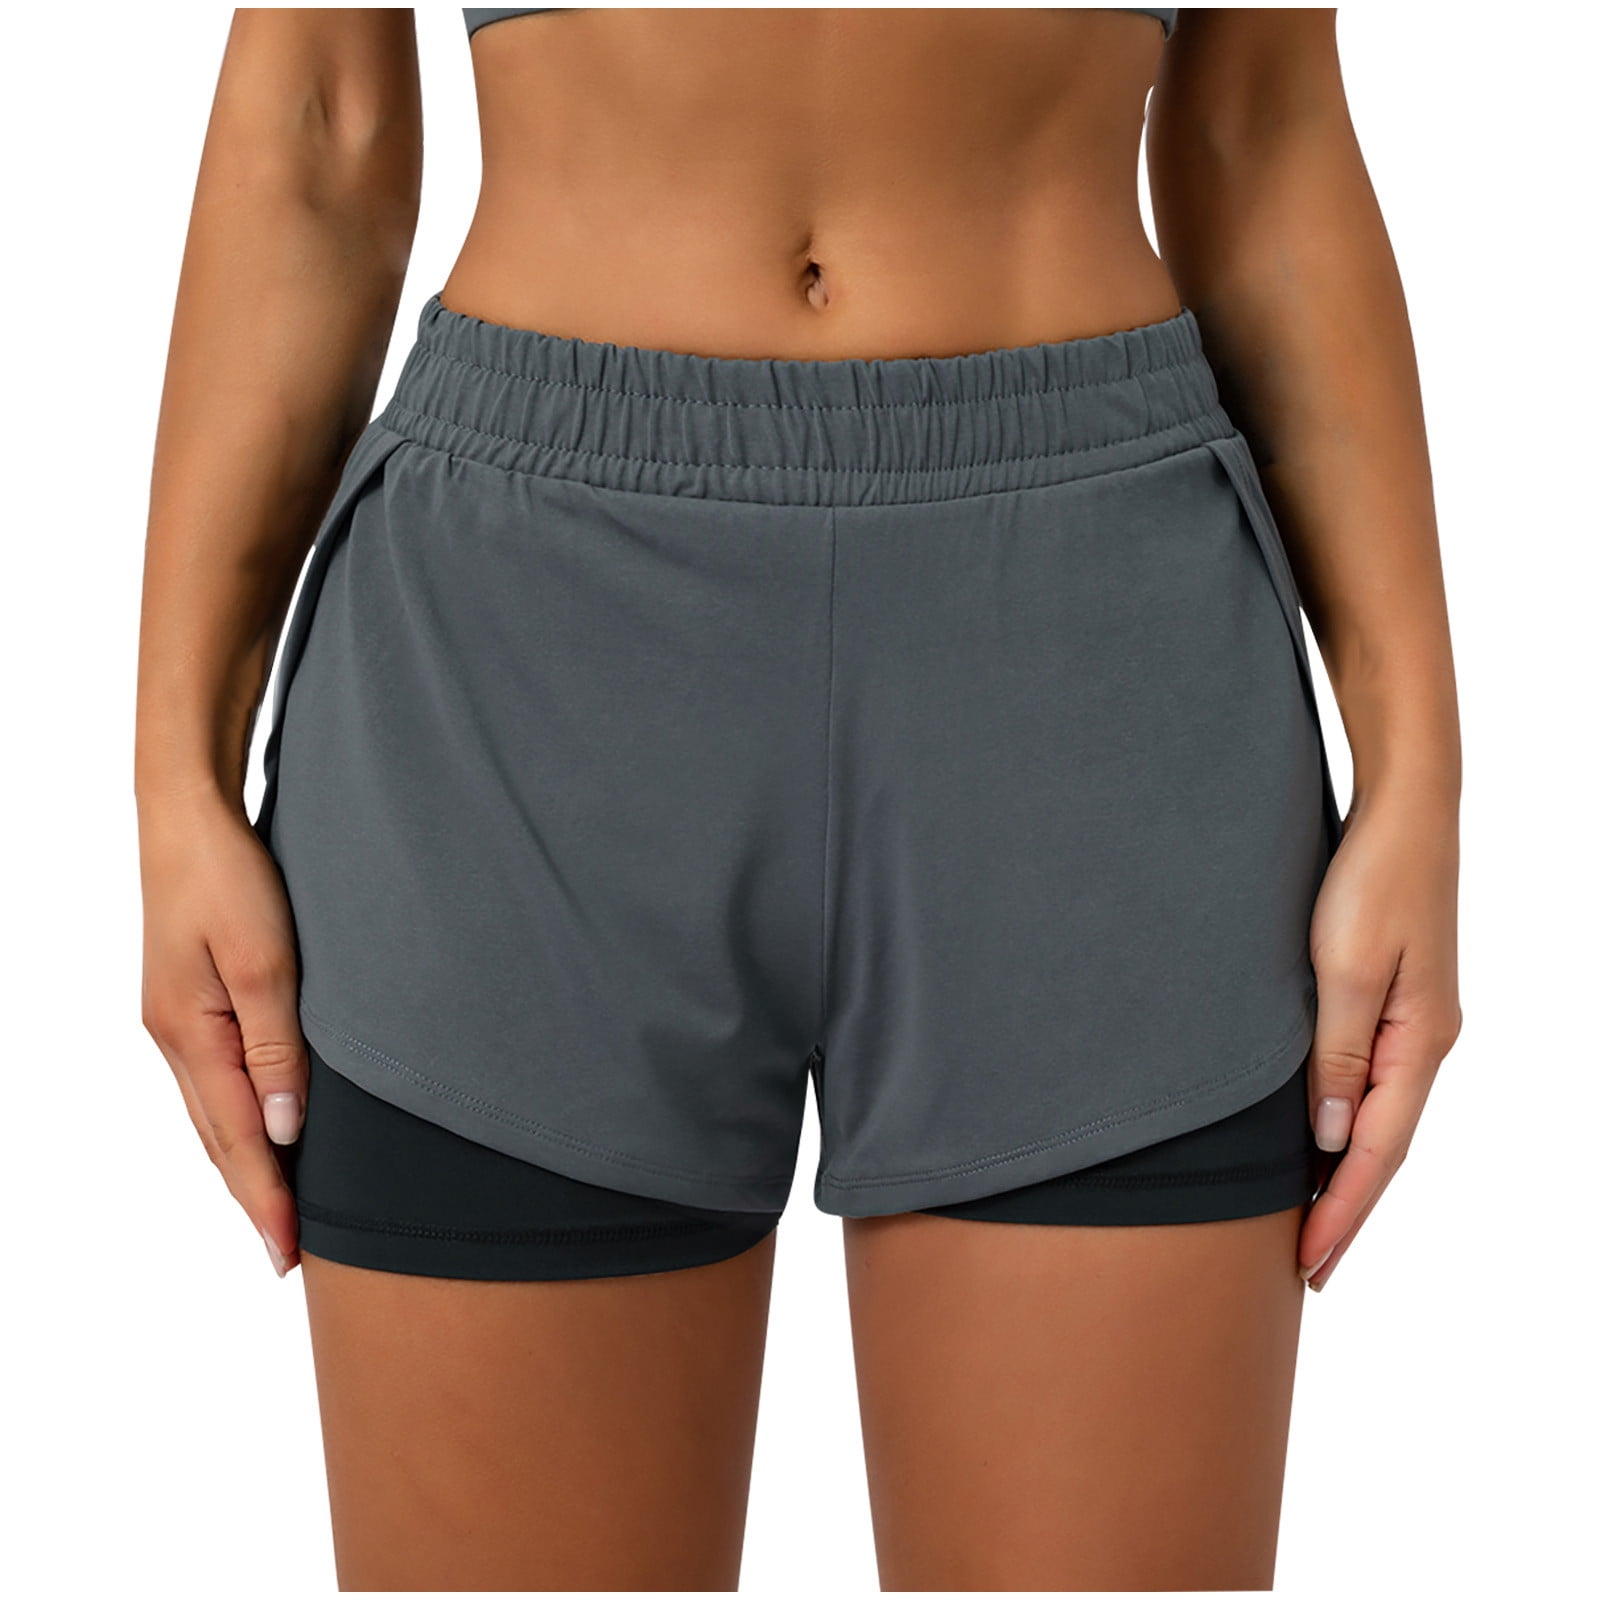 UMfun Shorts for Women, Workout Shorts, Women's High Waist Yoga Short  Abdomen Control Training Running Yoga Pants Black M 